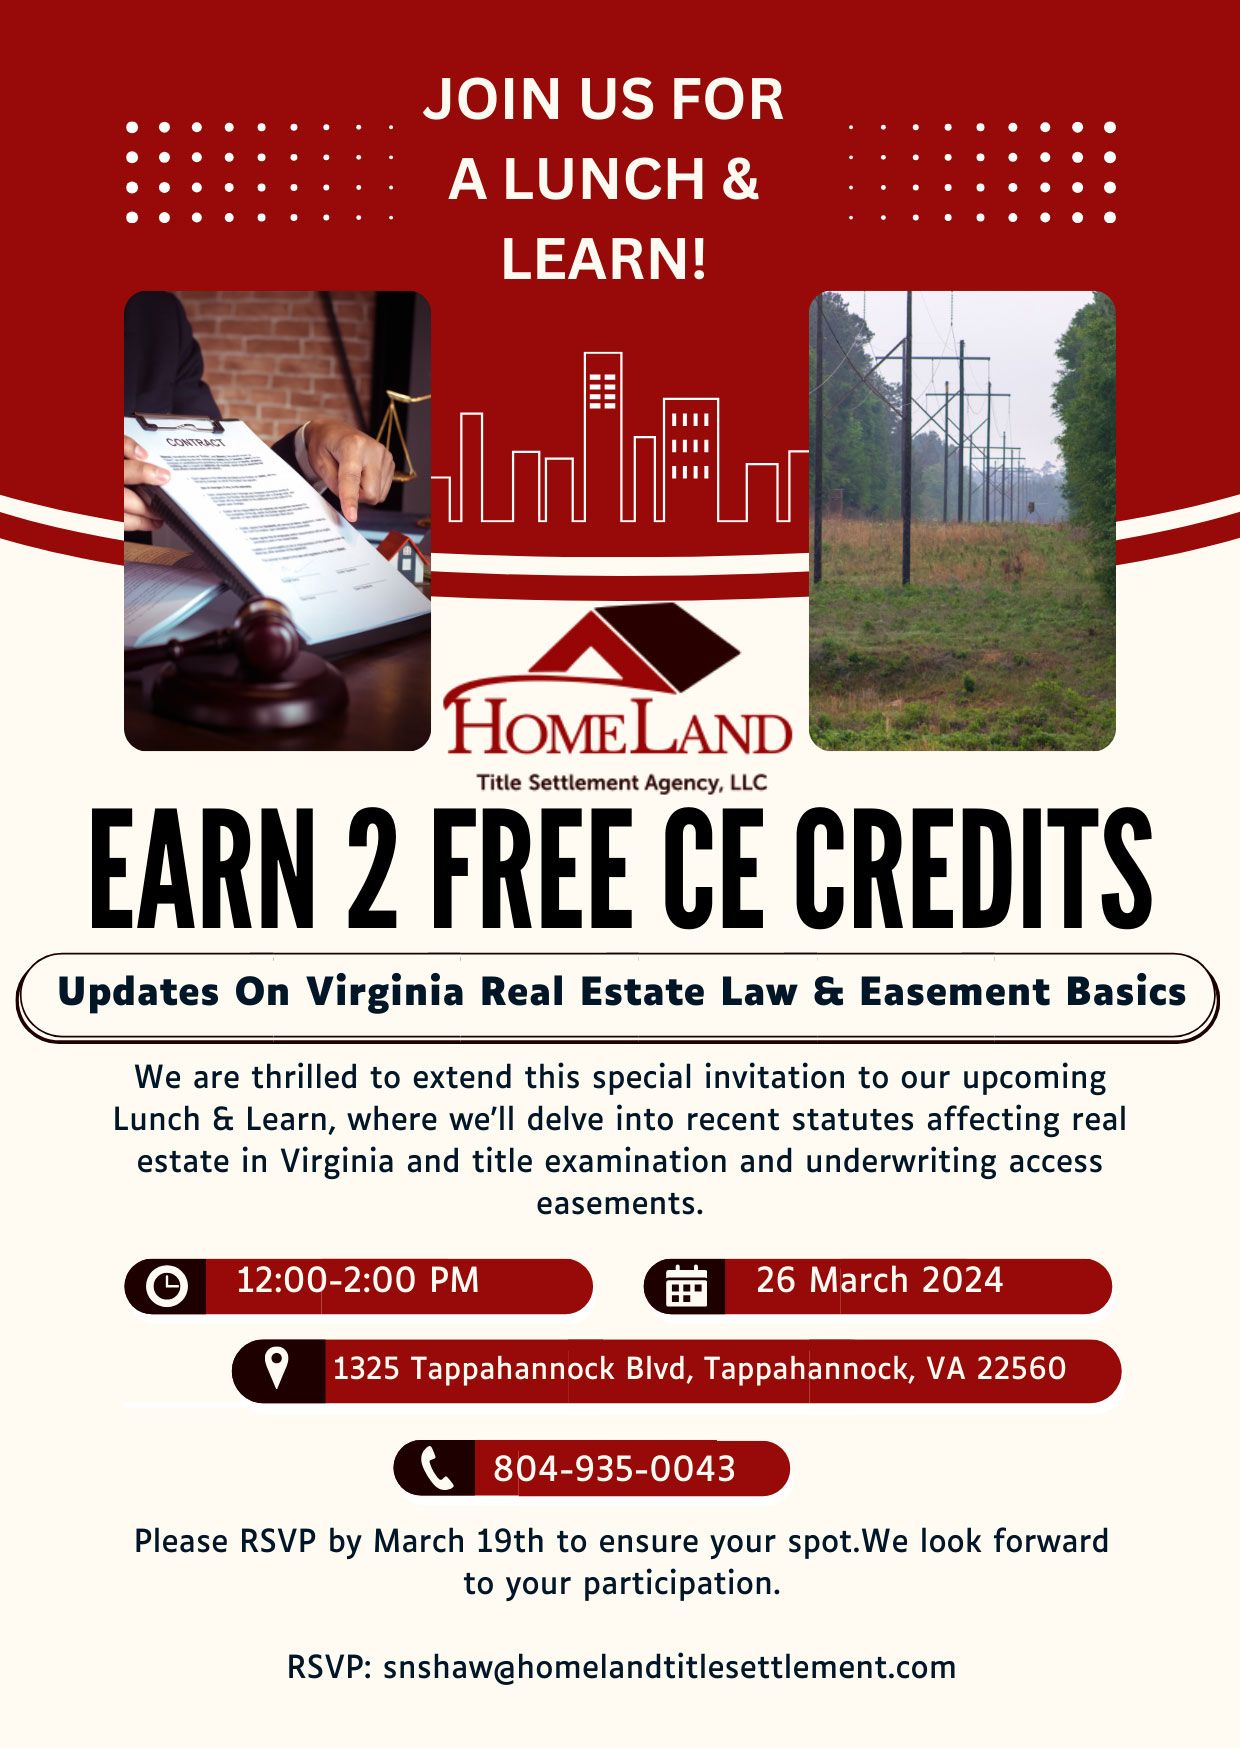 March 26 Event - Glen Allen, VA - Homeland Title Settlement Agency